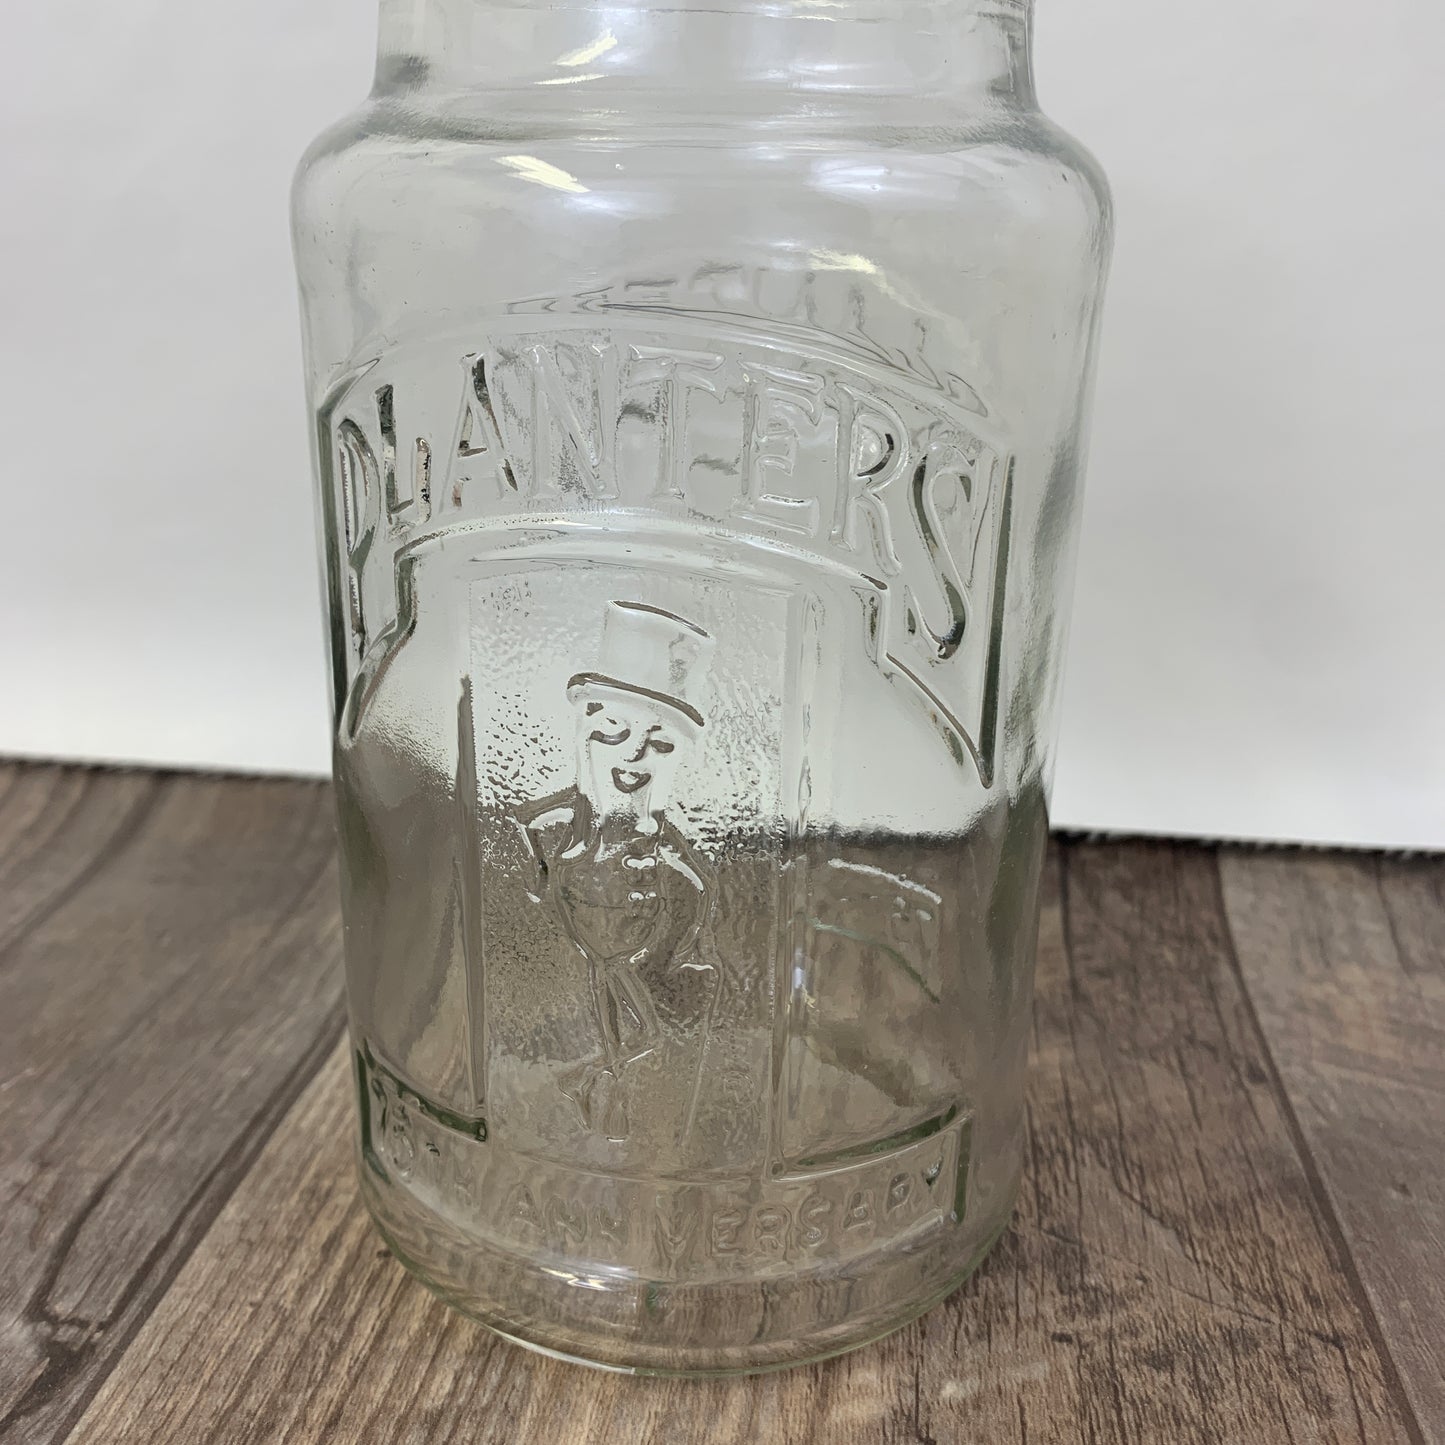 Planters Peanuts 75th Anniversary Jar, Vintage 80s Kitchen Storage Jar, Vintage Advertising Collectible Gift